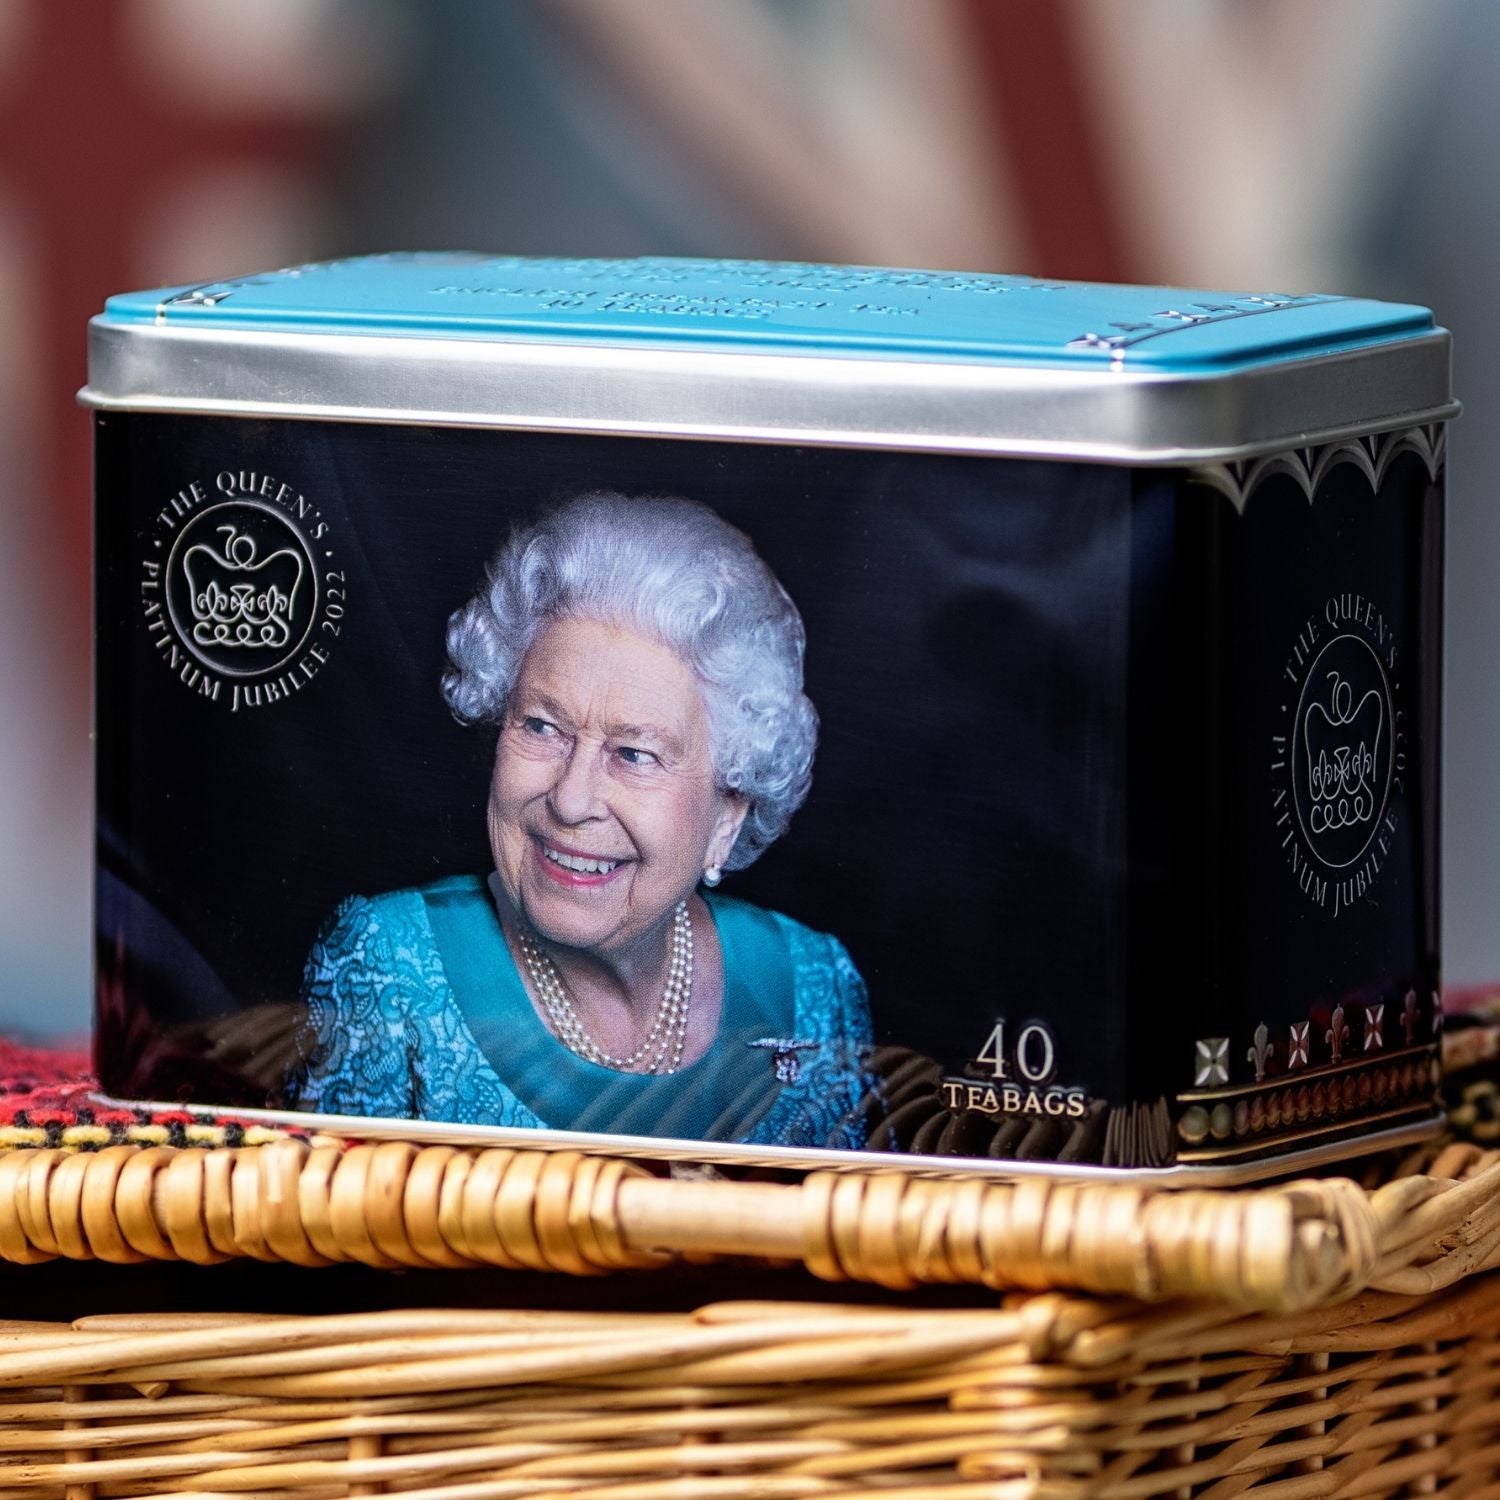 Image of Queen Elizabeth II Platinum Jubilee 2022 Tea Tin with 40 English Breakfast Teabags